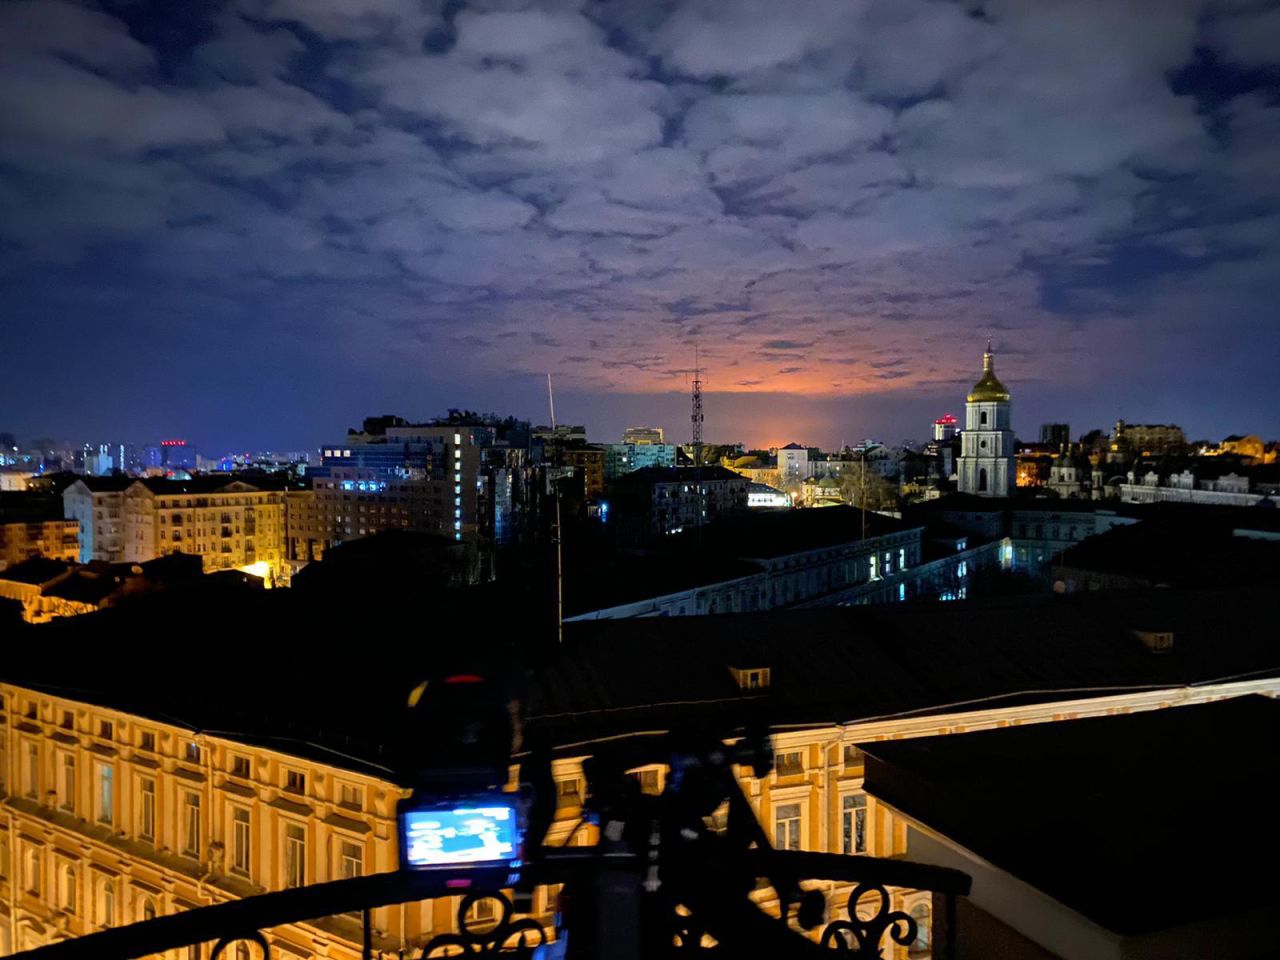 A vast explosion lits up the Kyiv night sky on Sunday, February 27.